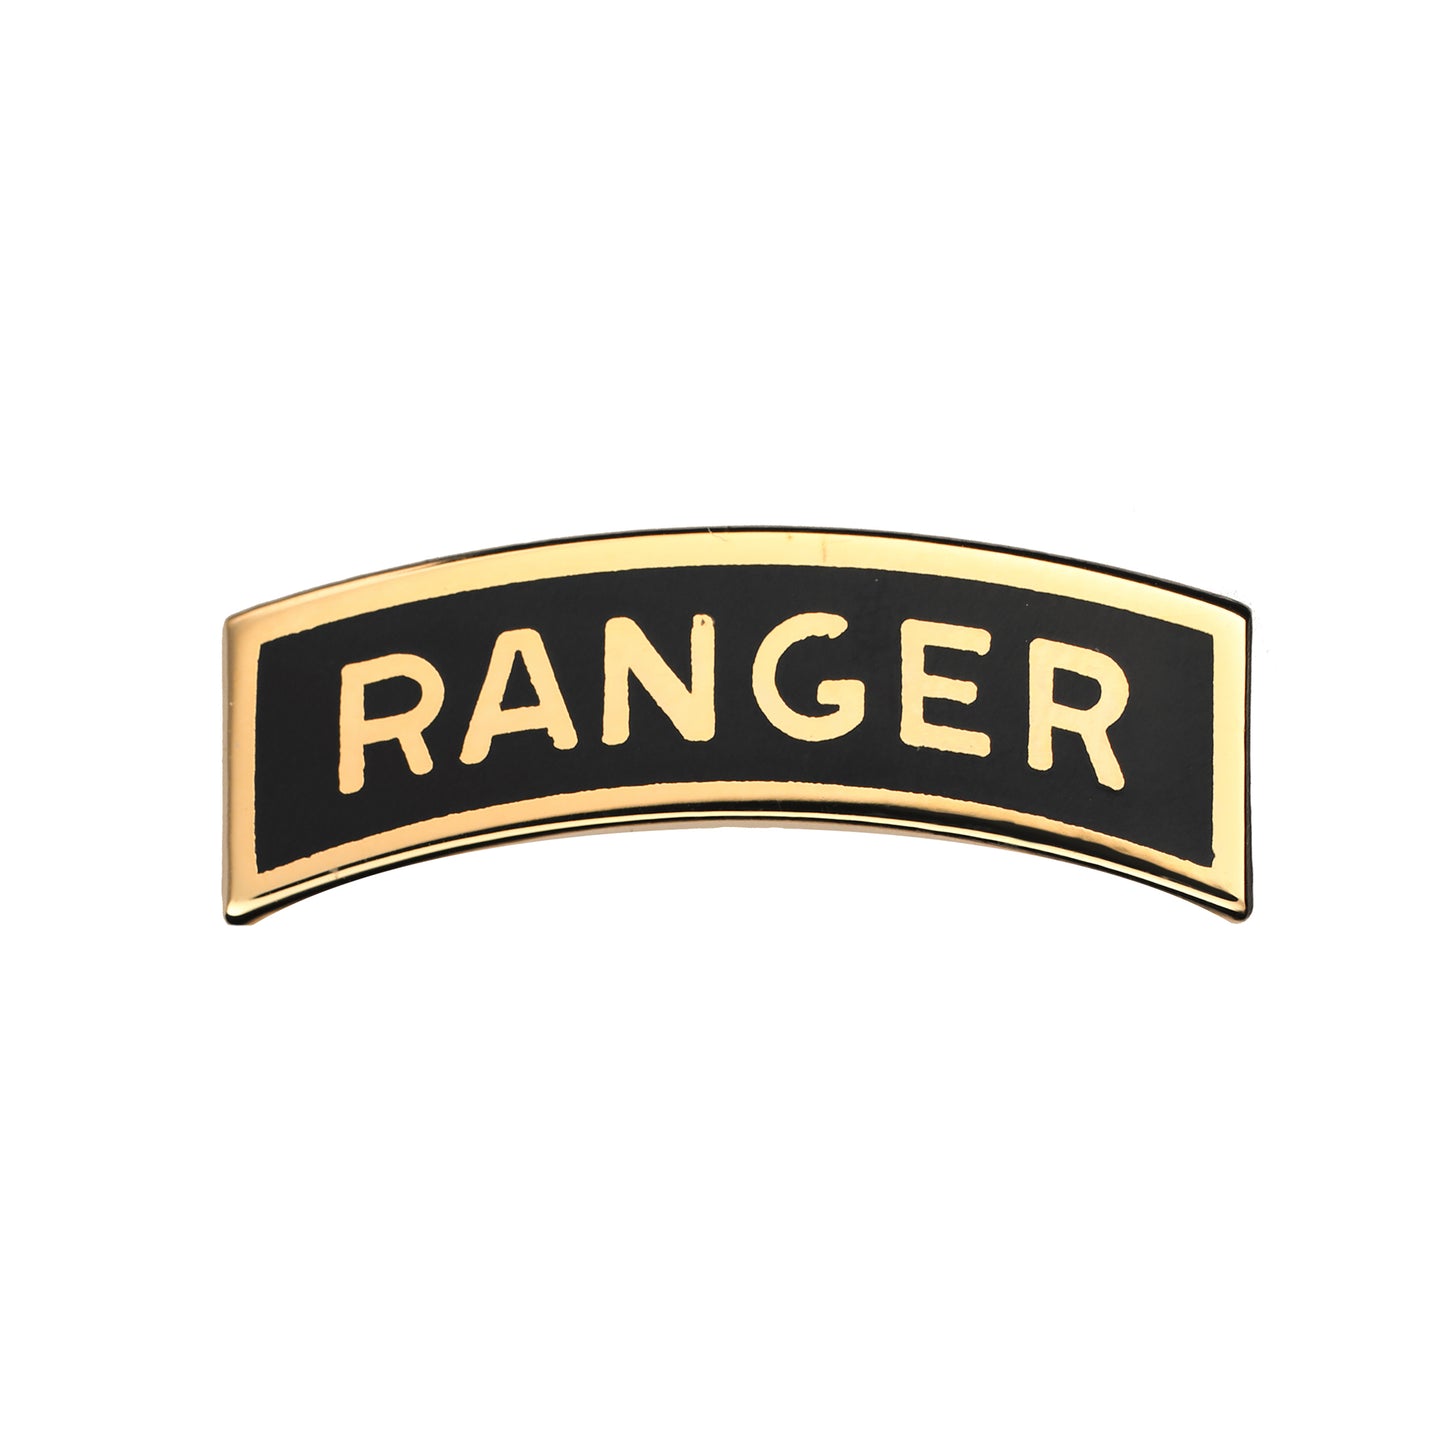 U.S. Army Ranger Full Size Sta-Brite® Pin-on Badge